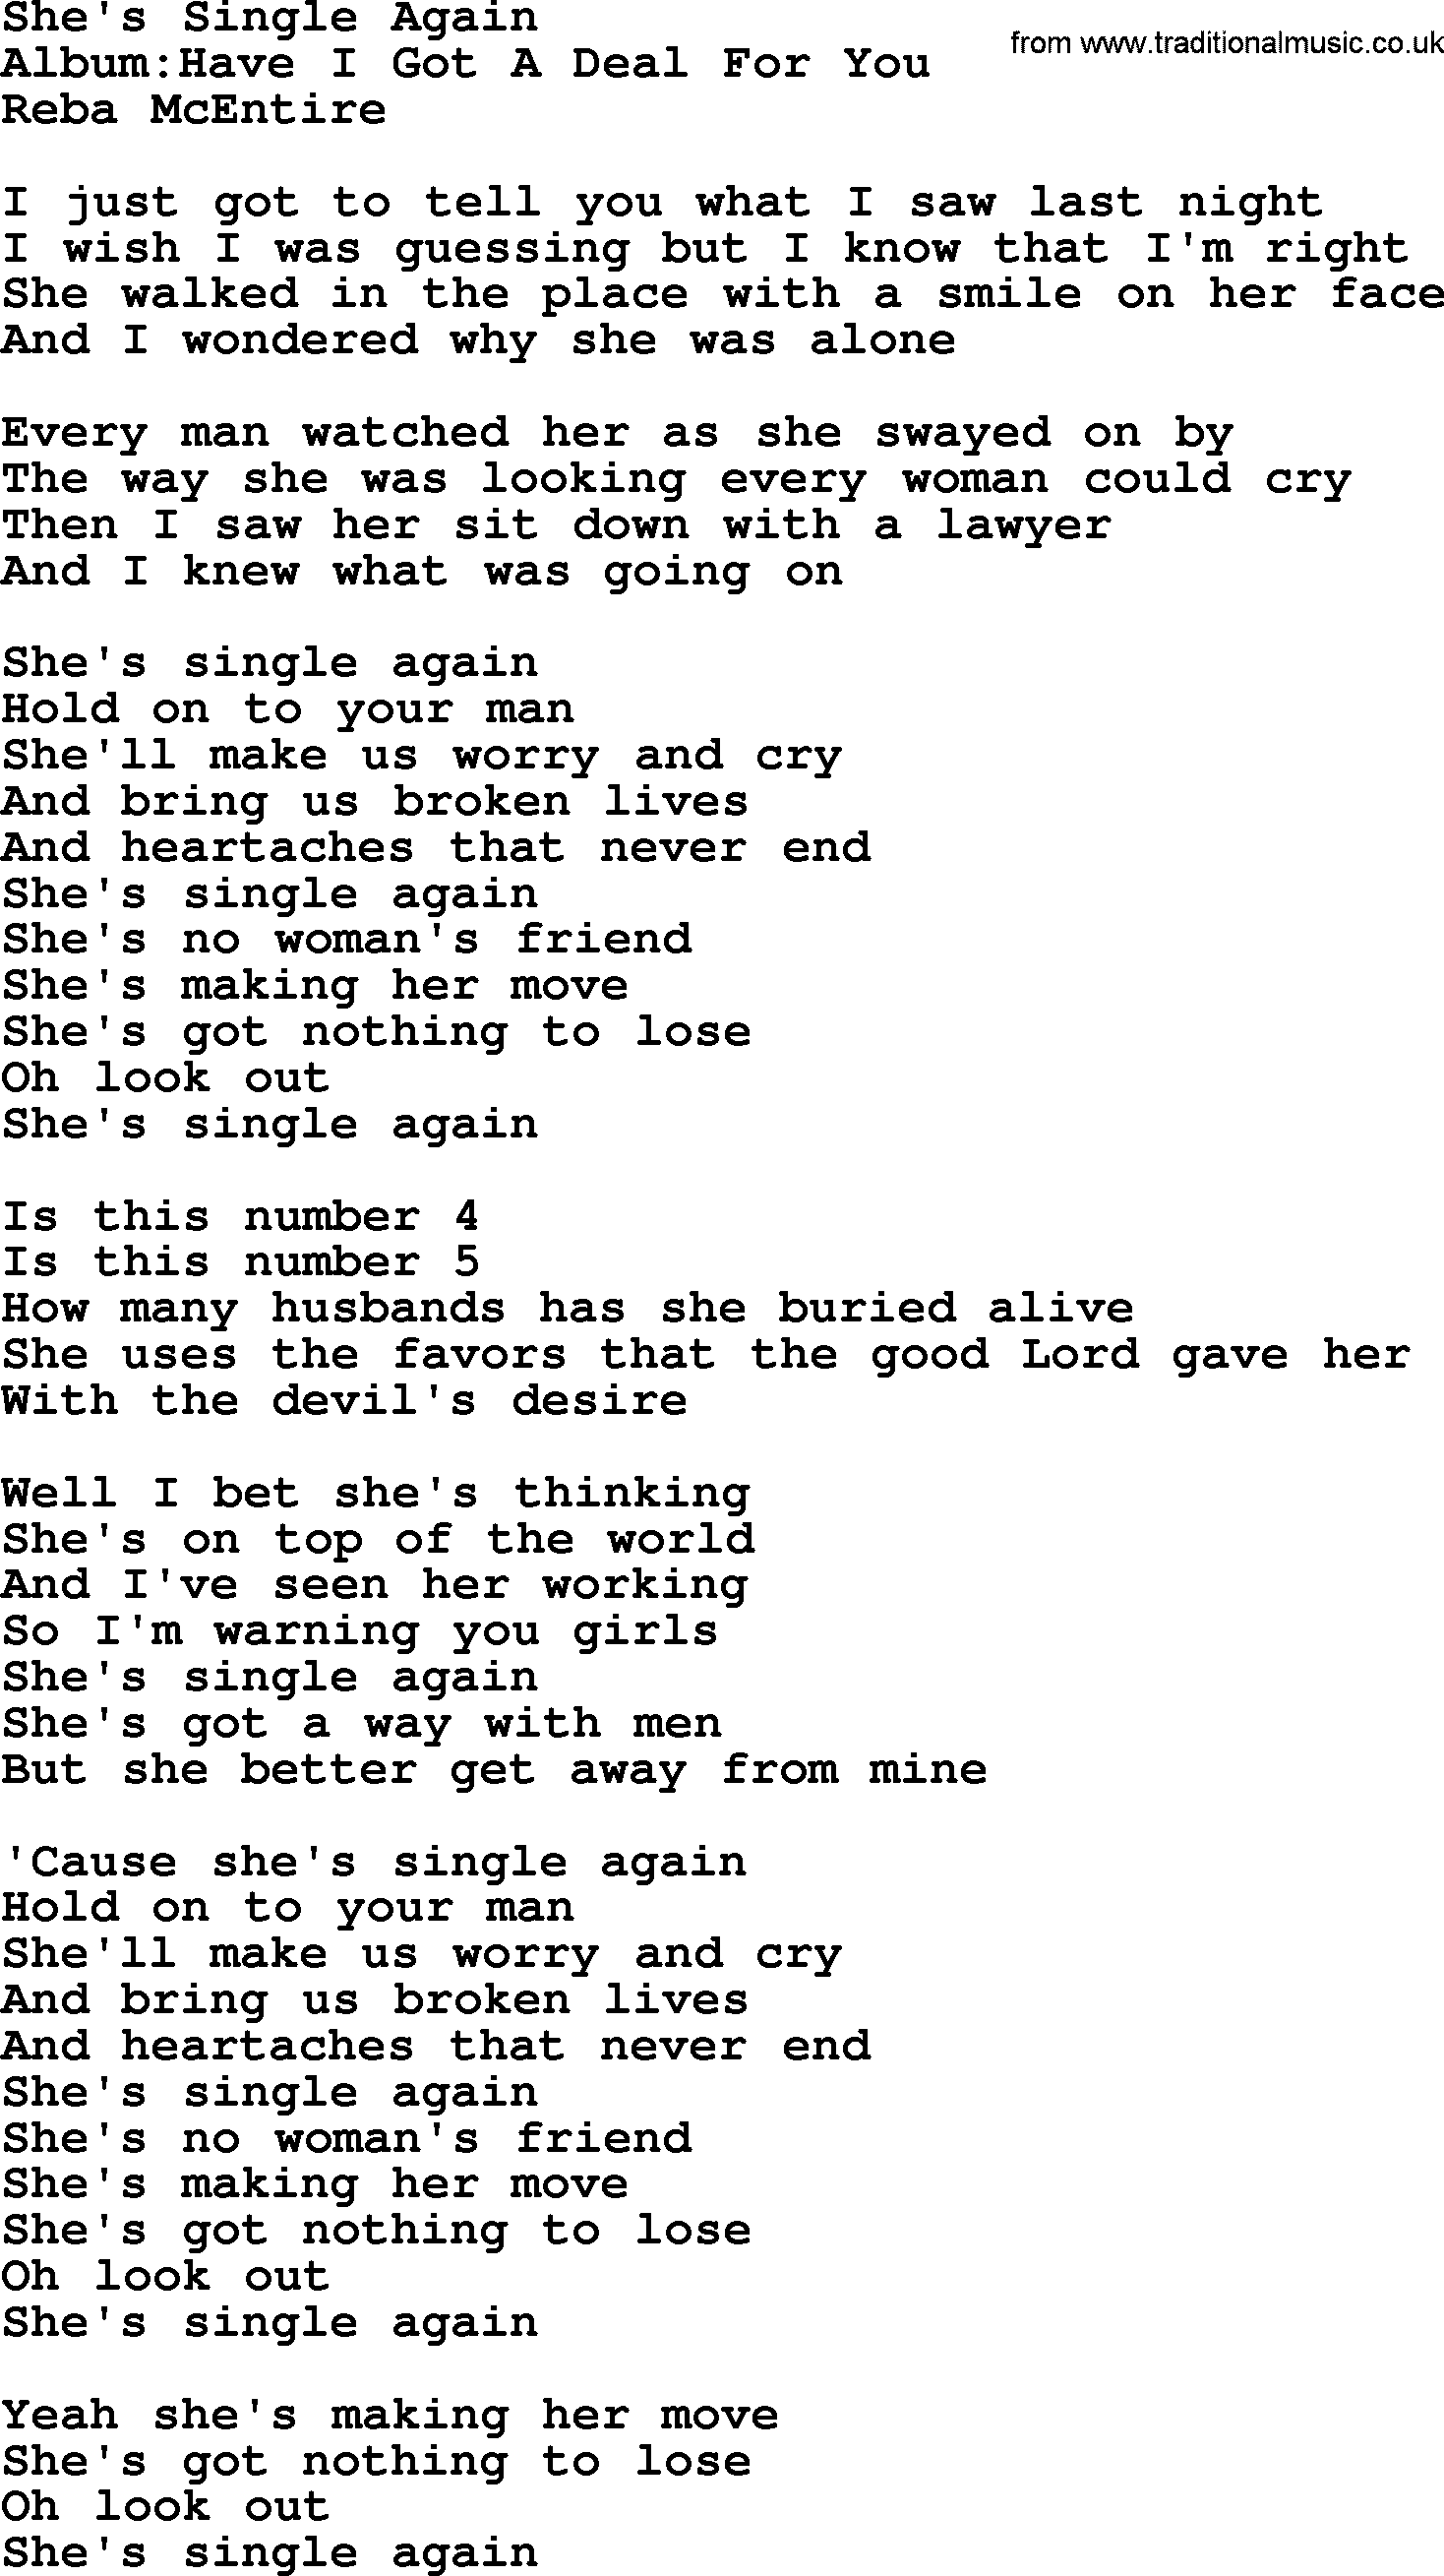 She's Single Again, by Reba McEntire - lyrics